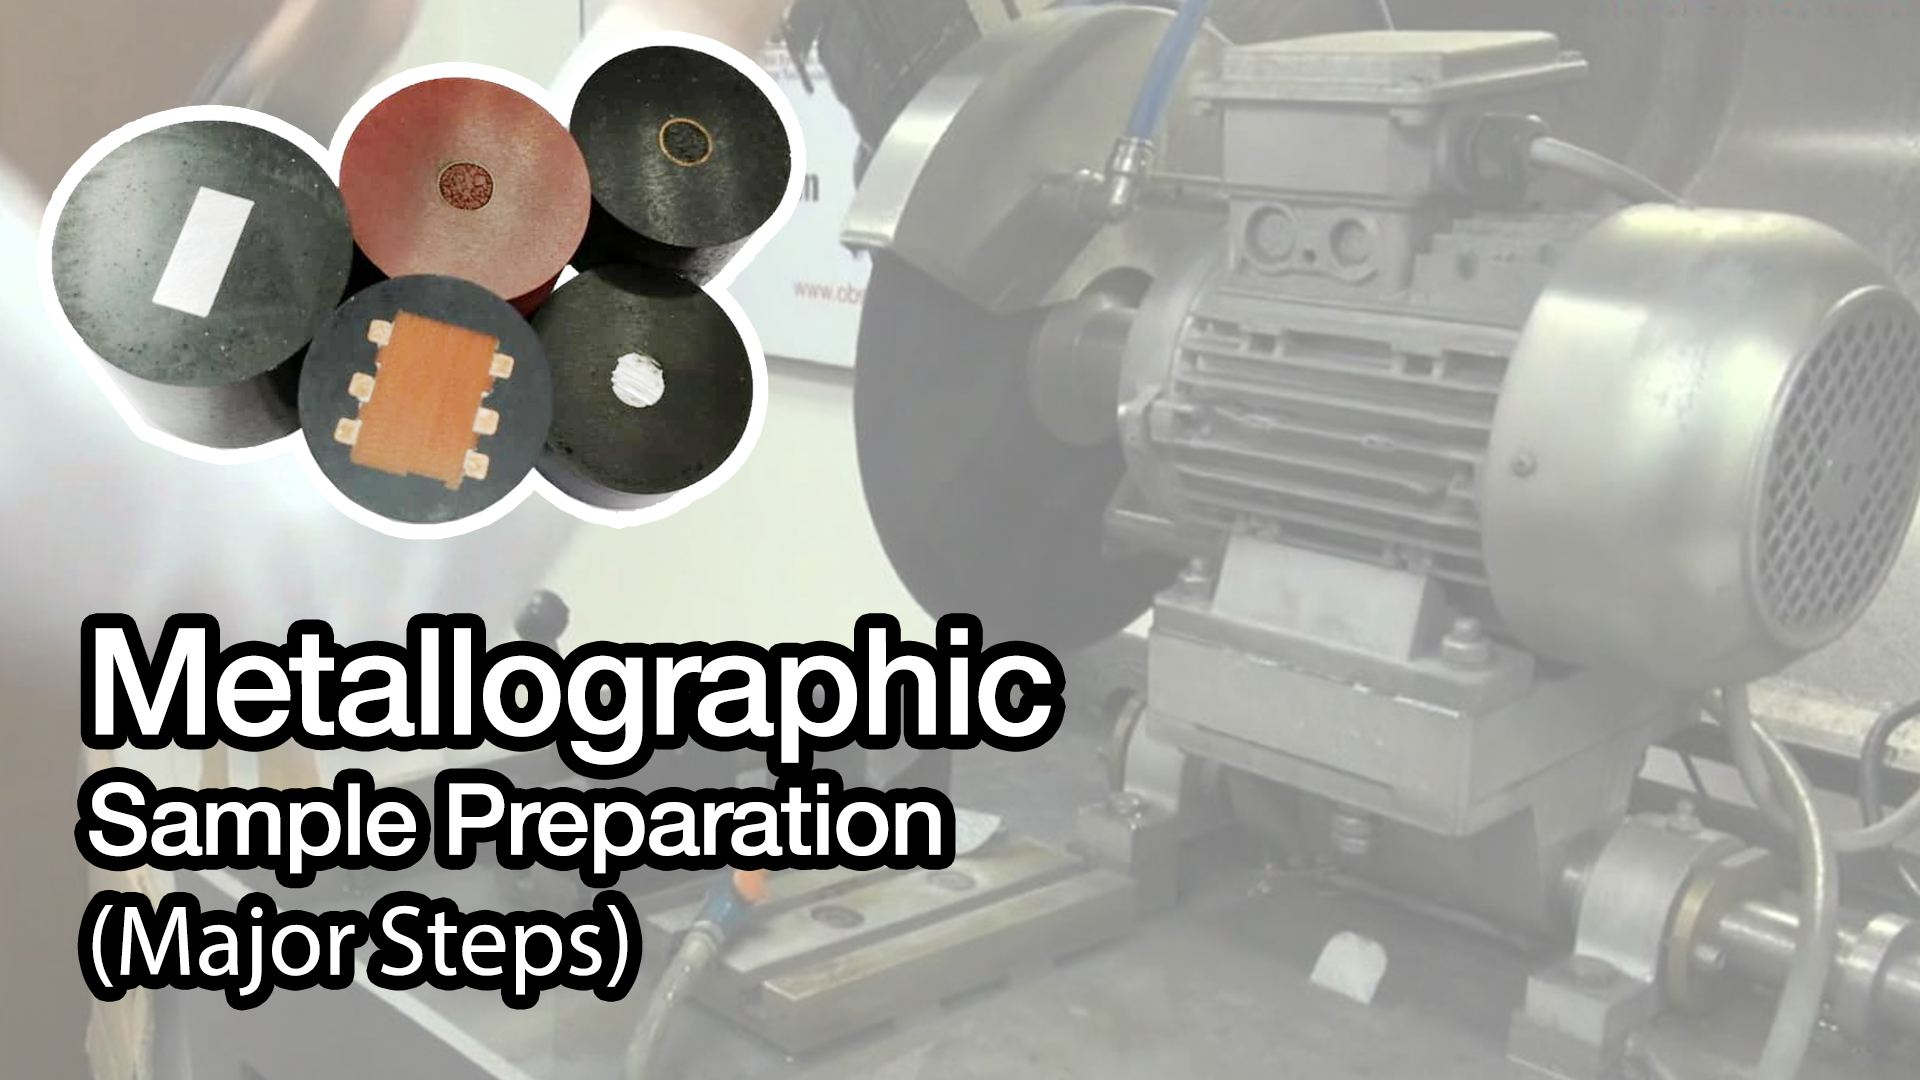 Metallographic Specimen Preparation Cleaning